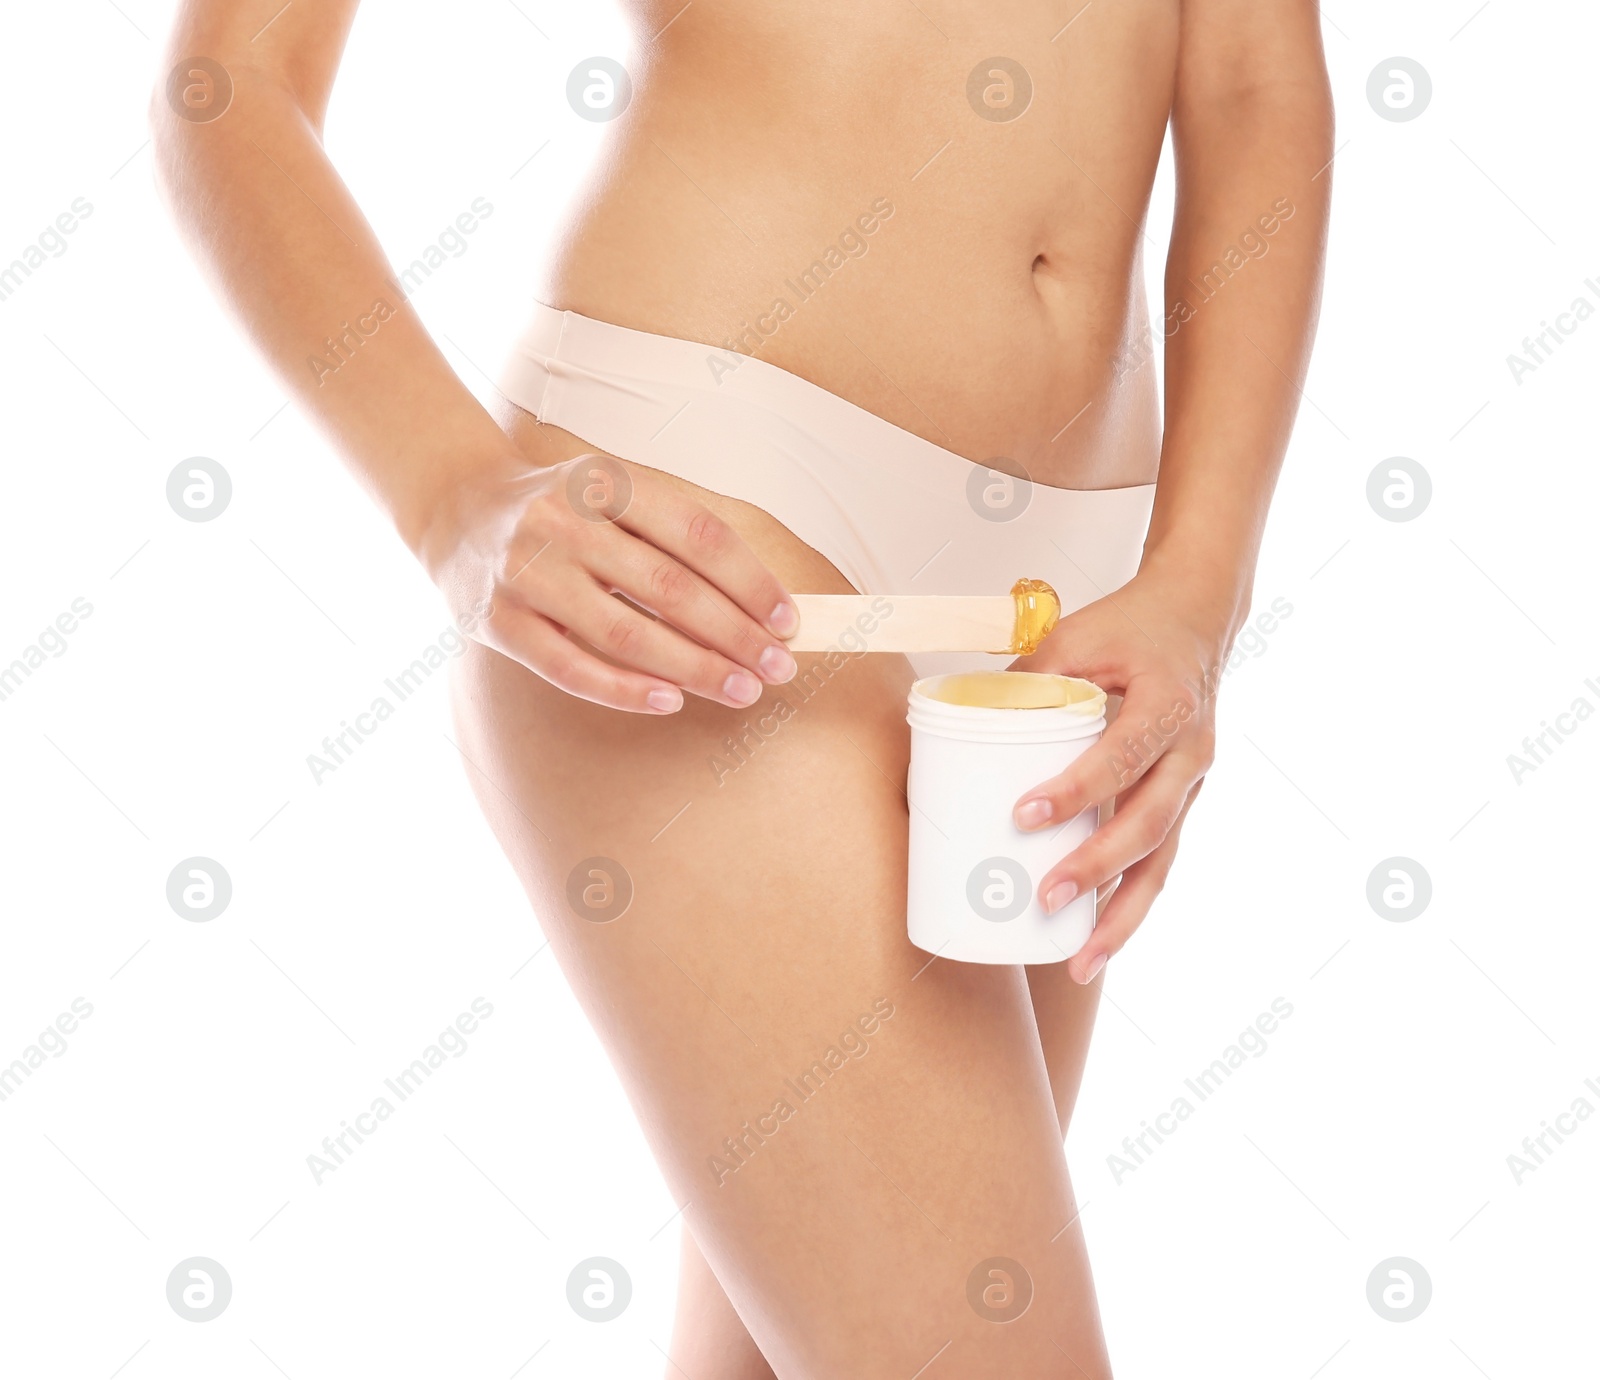 Photo of Young woman waxing bikini area on white background